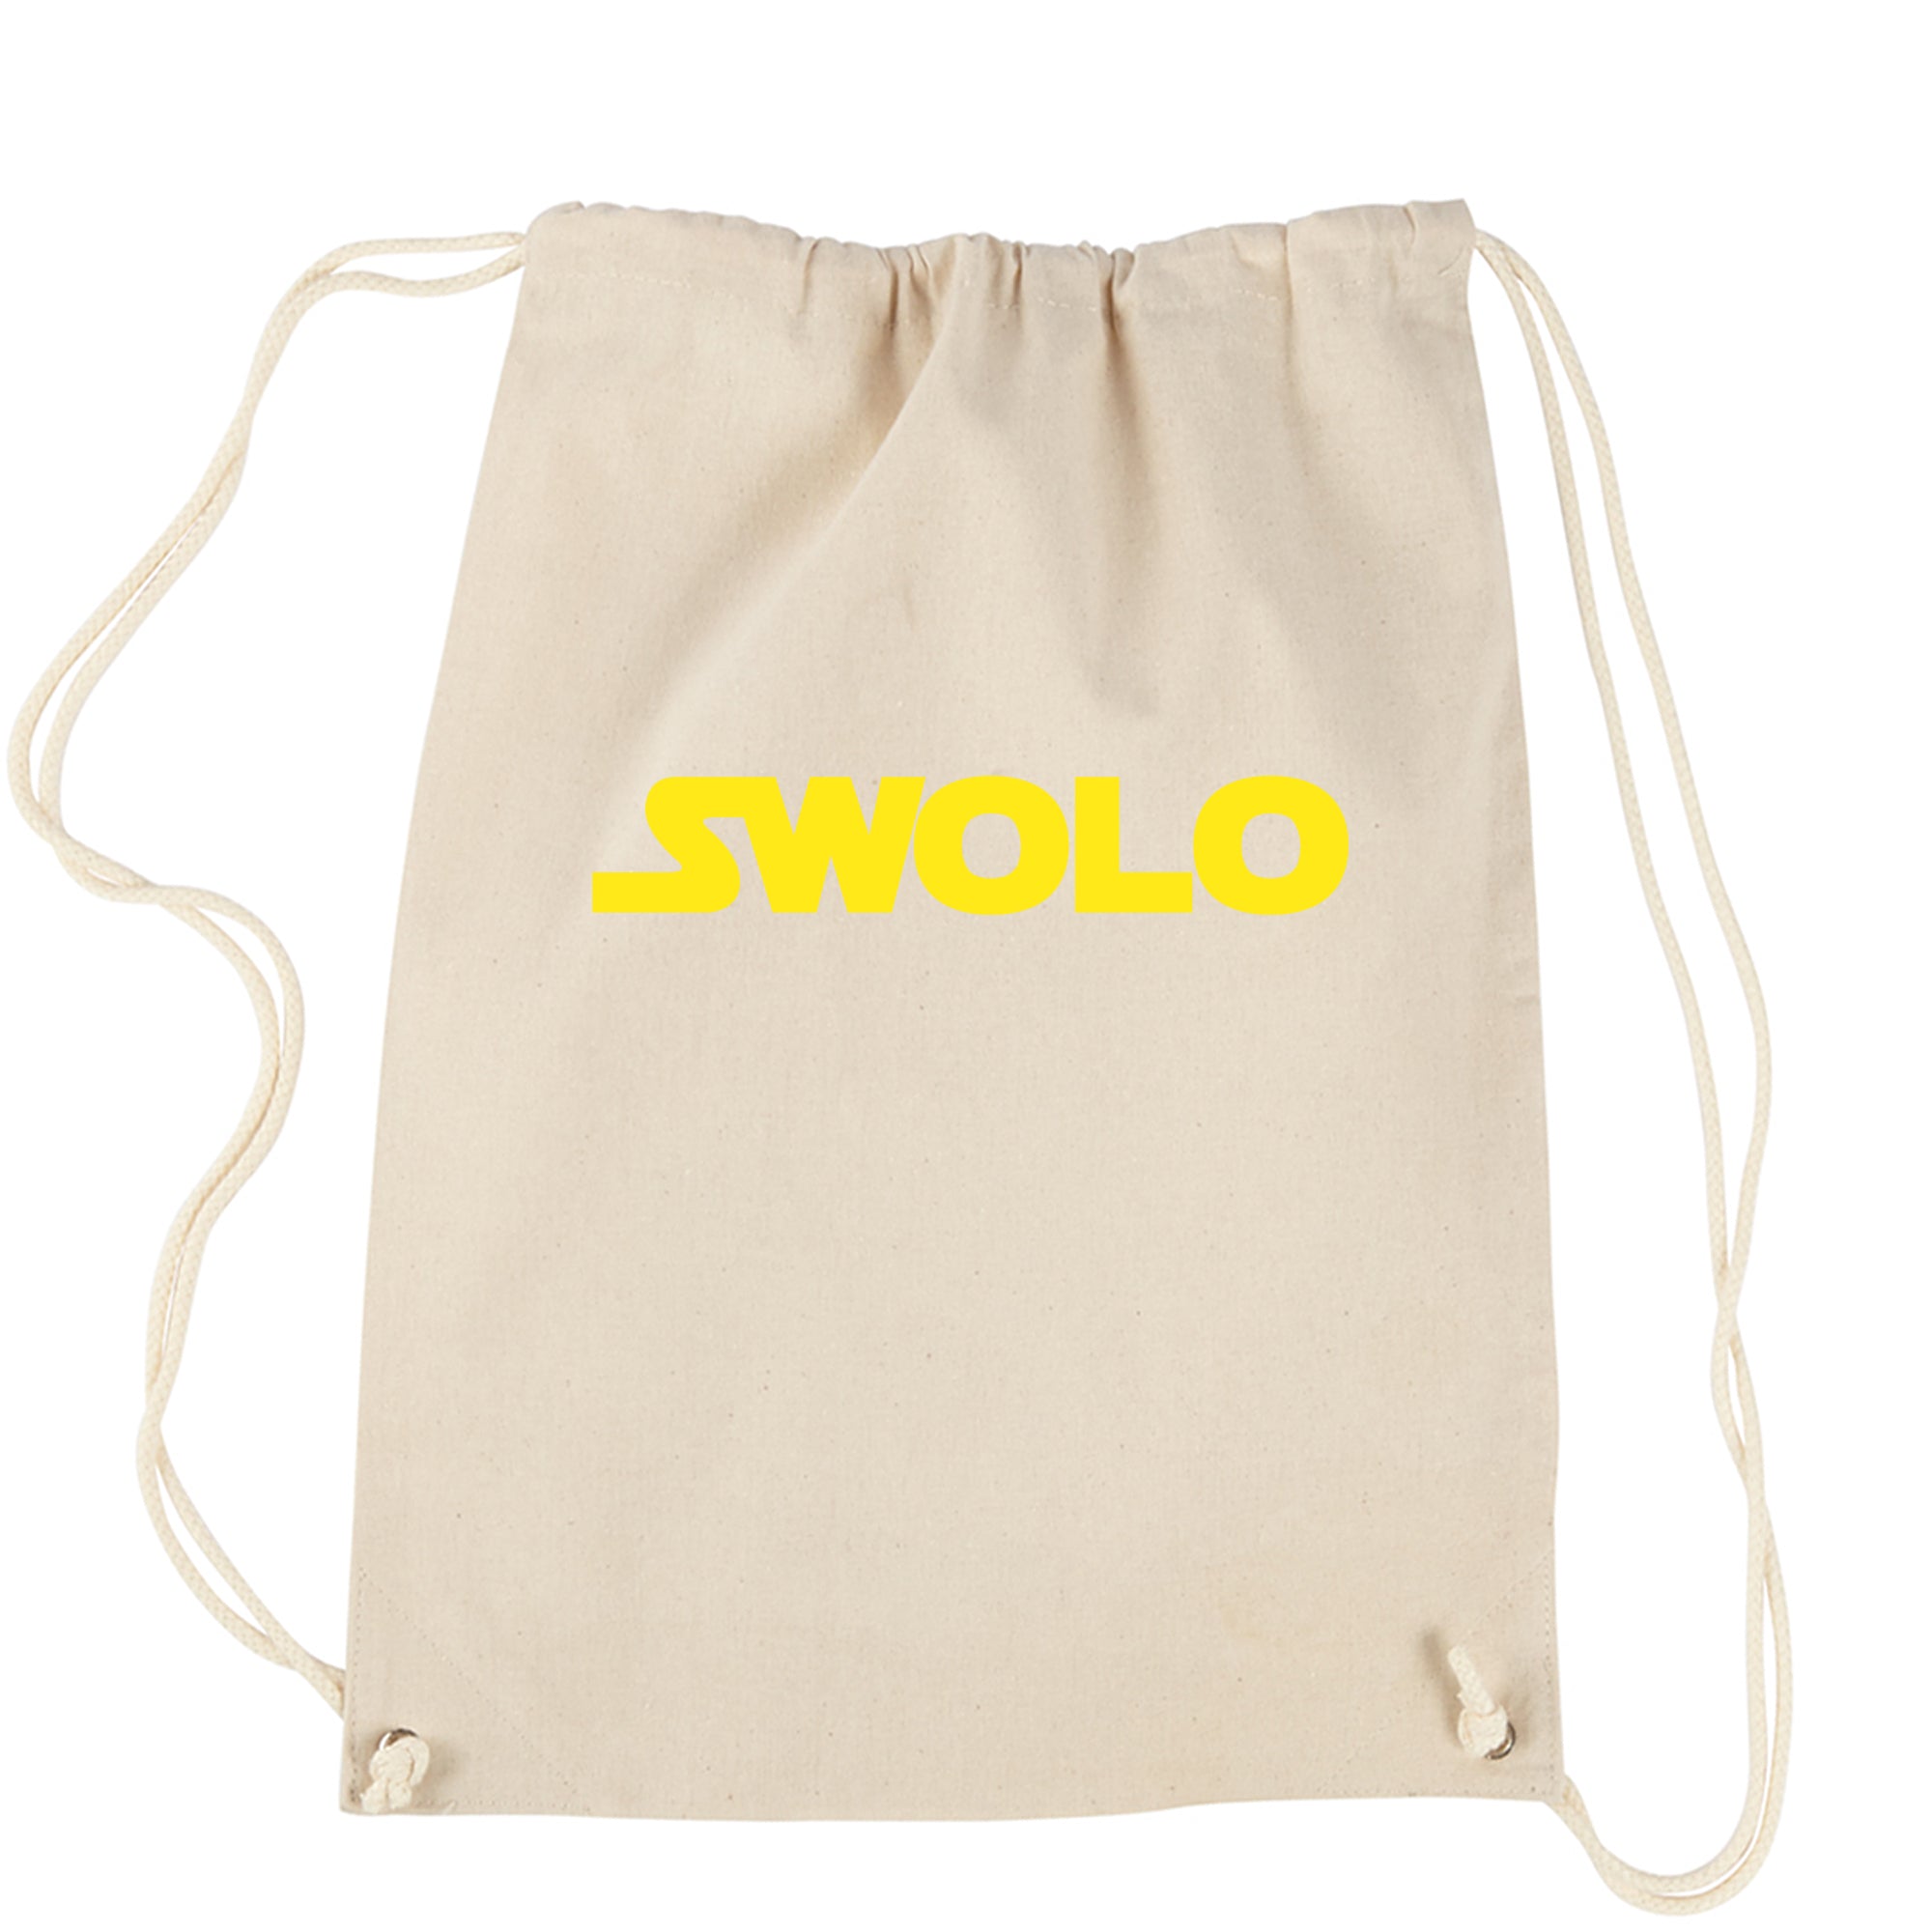 Ben Swolo Star Warship Funny Parody Drawstring Backpack